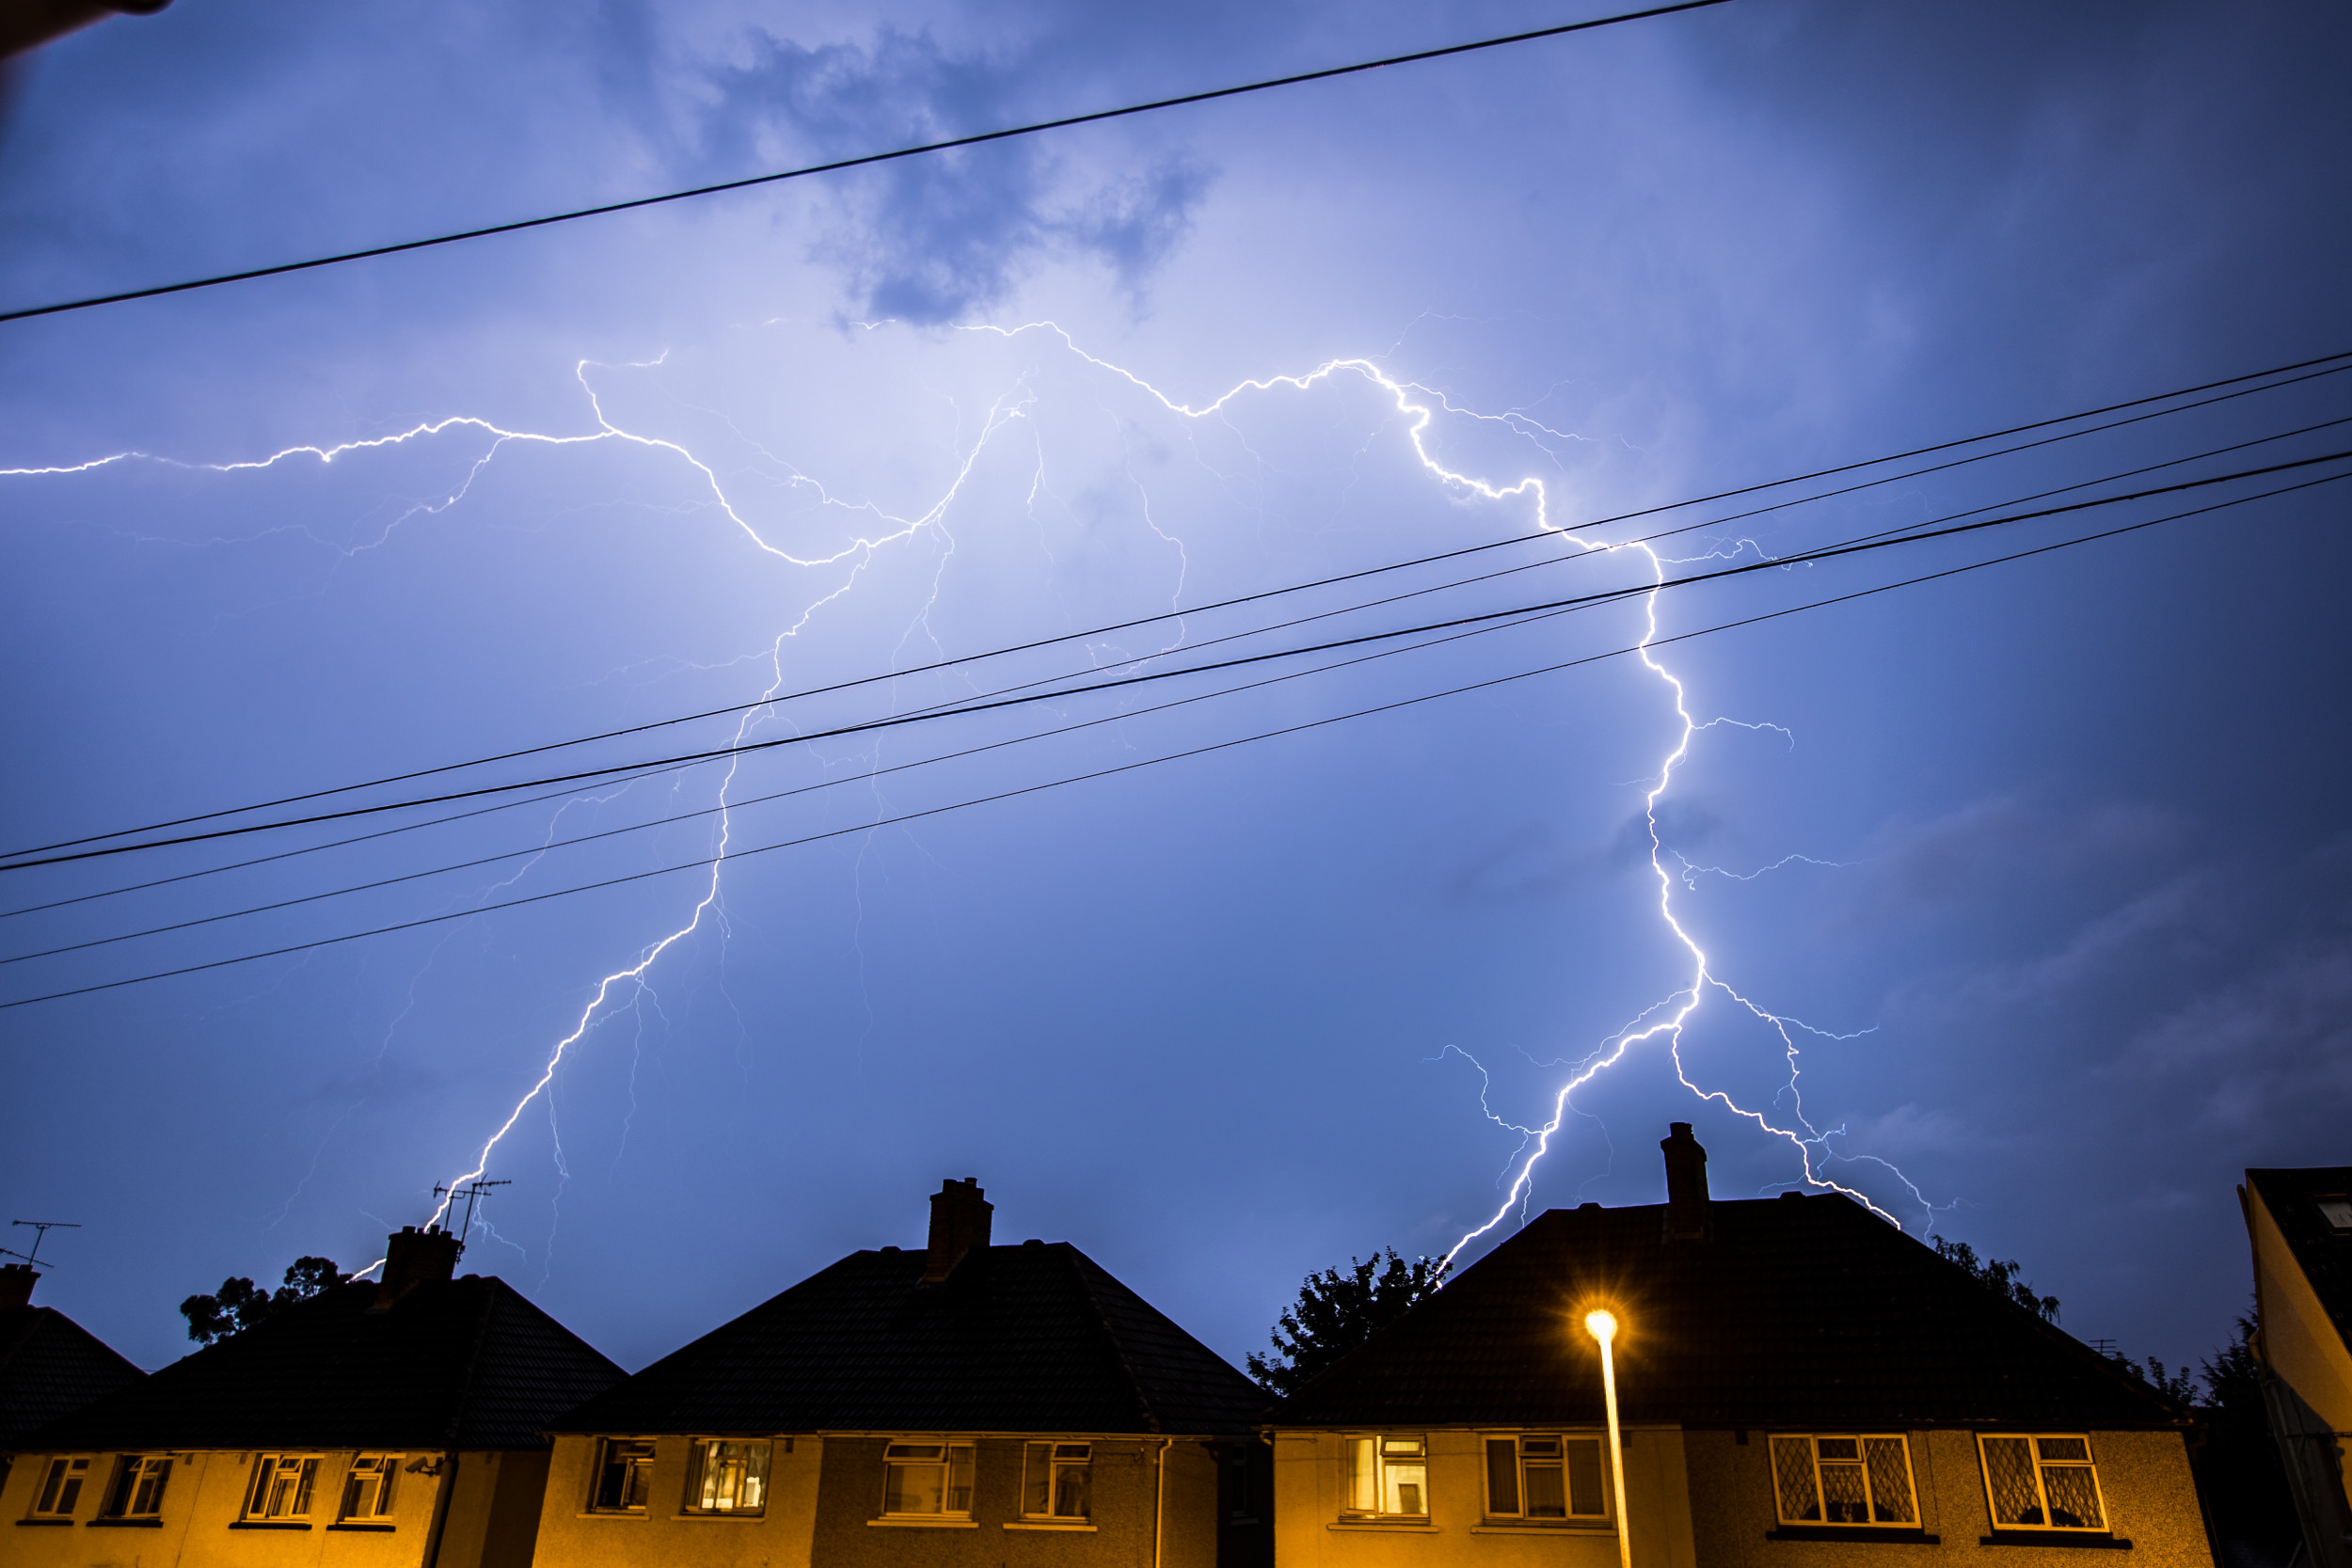 Doorbell Camera Captures Shocking Moment Lightning Strikes New Home Newsweek 